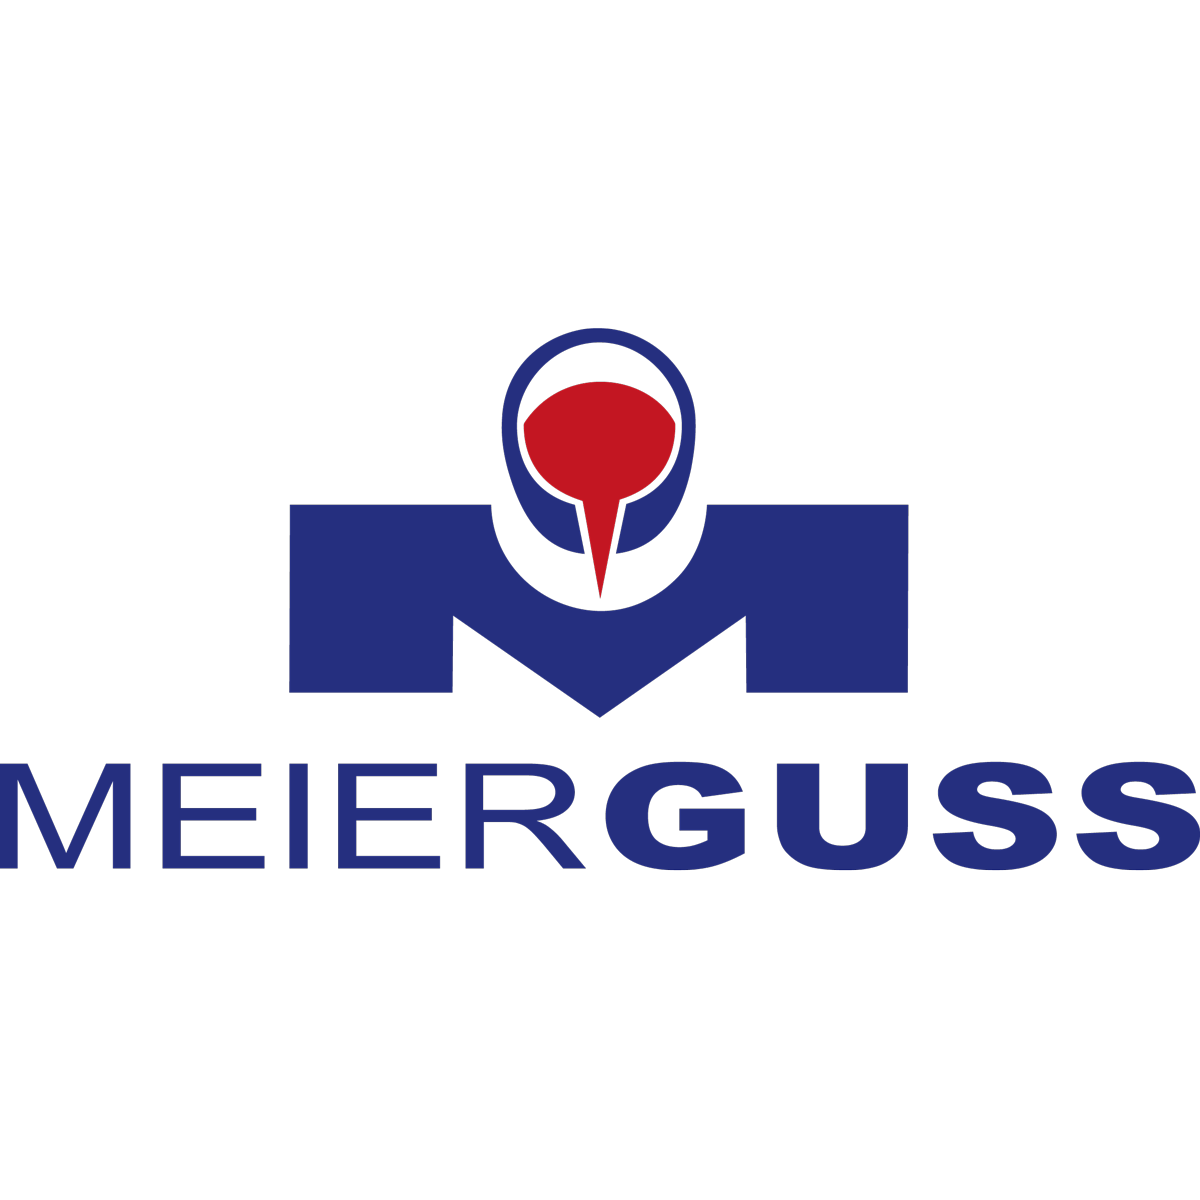 MeierGuss Sales & Logistics GmbH & Co. KG Logo